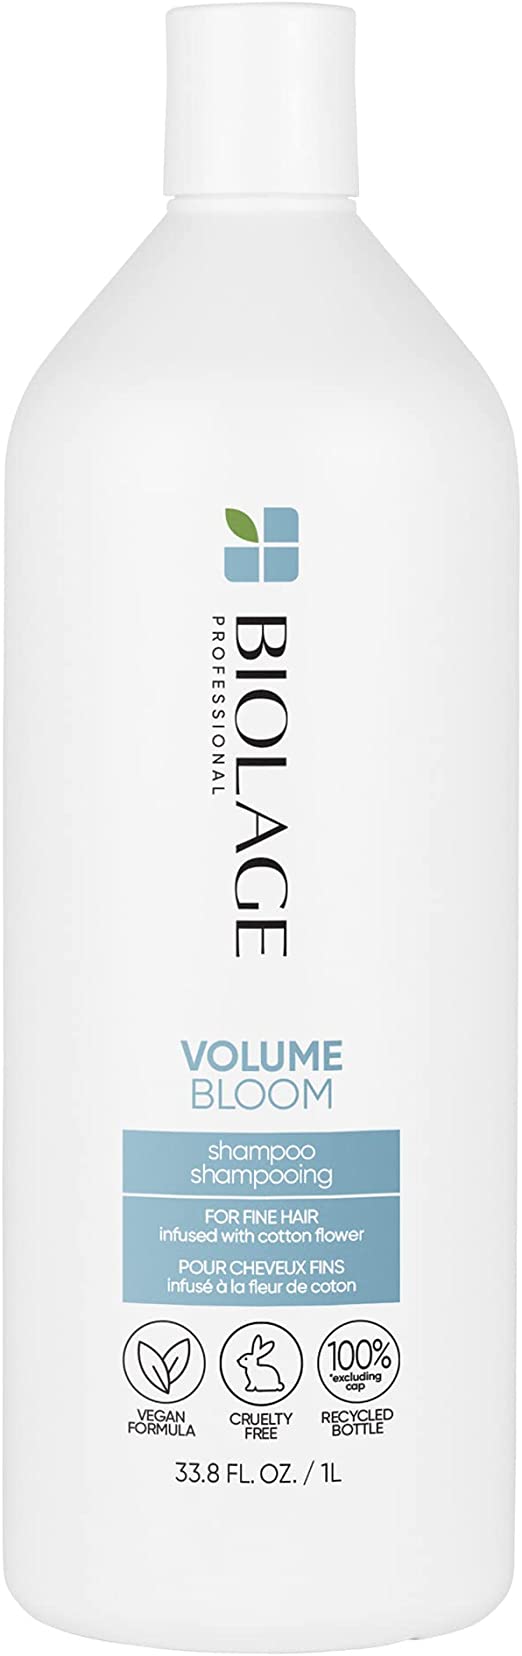 Matrix Biolage Volumebloom Shampoo 1 Litre